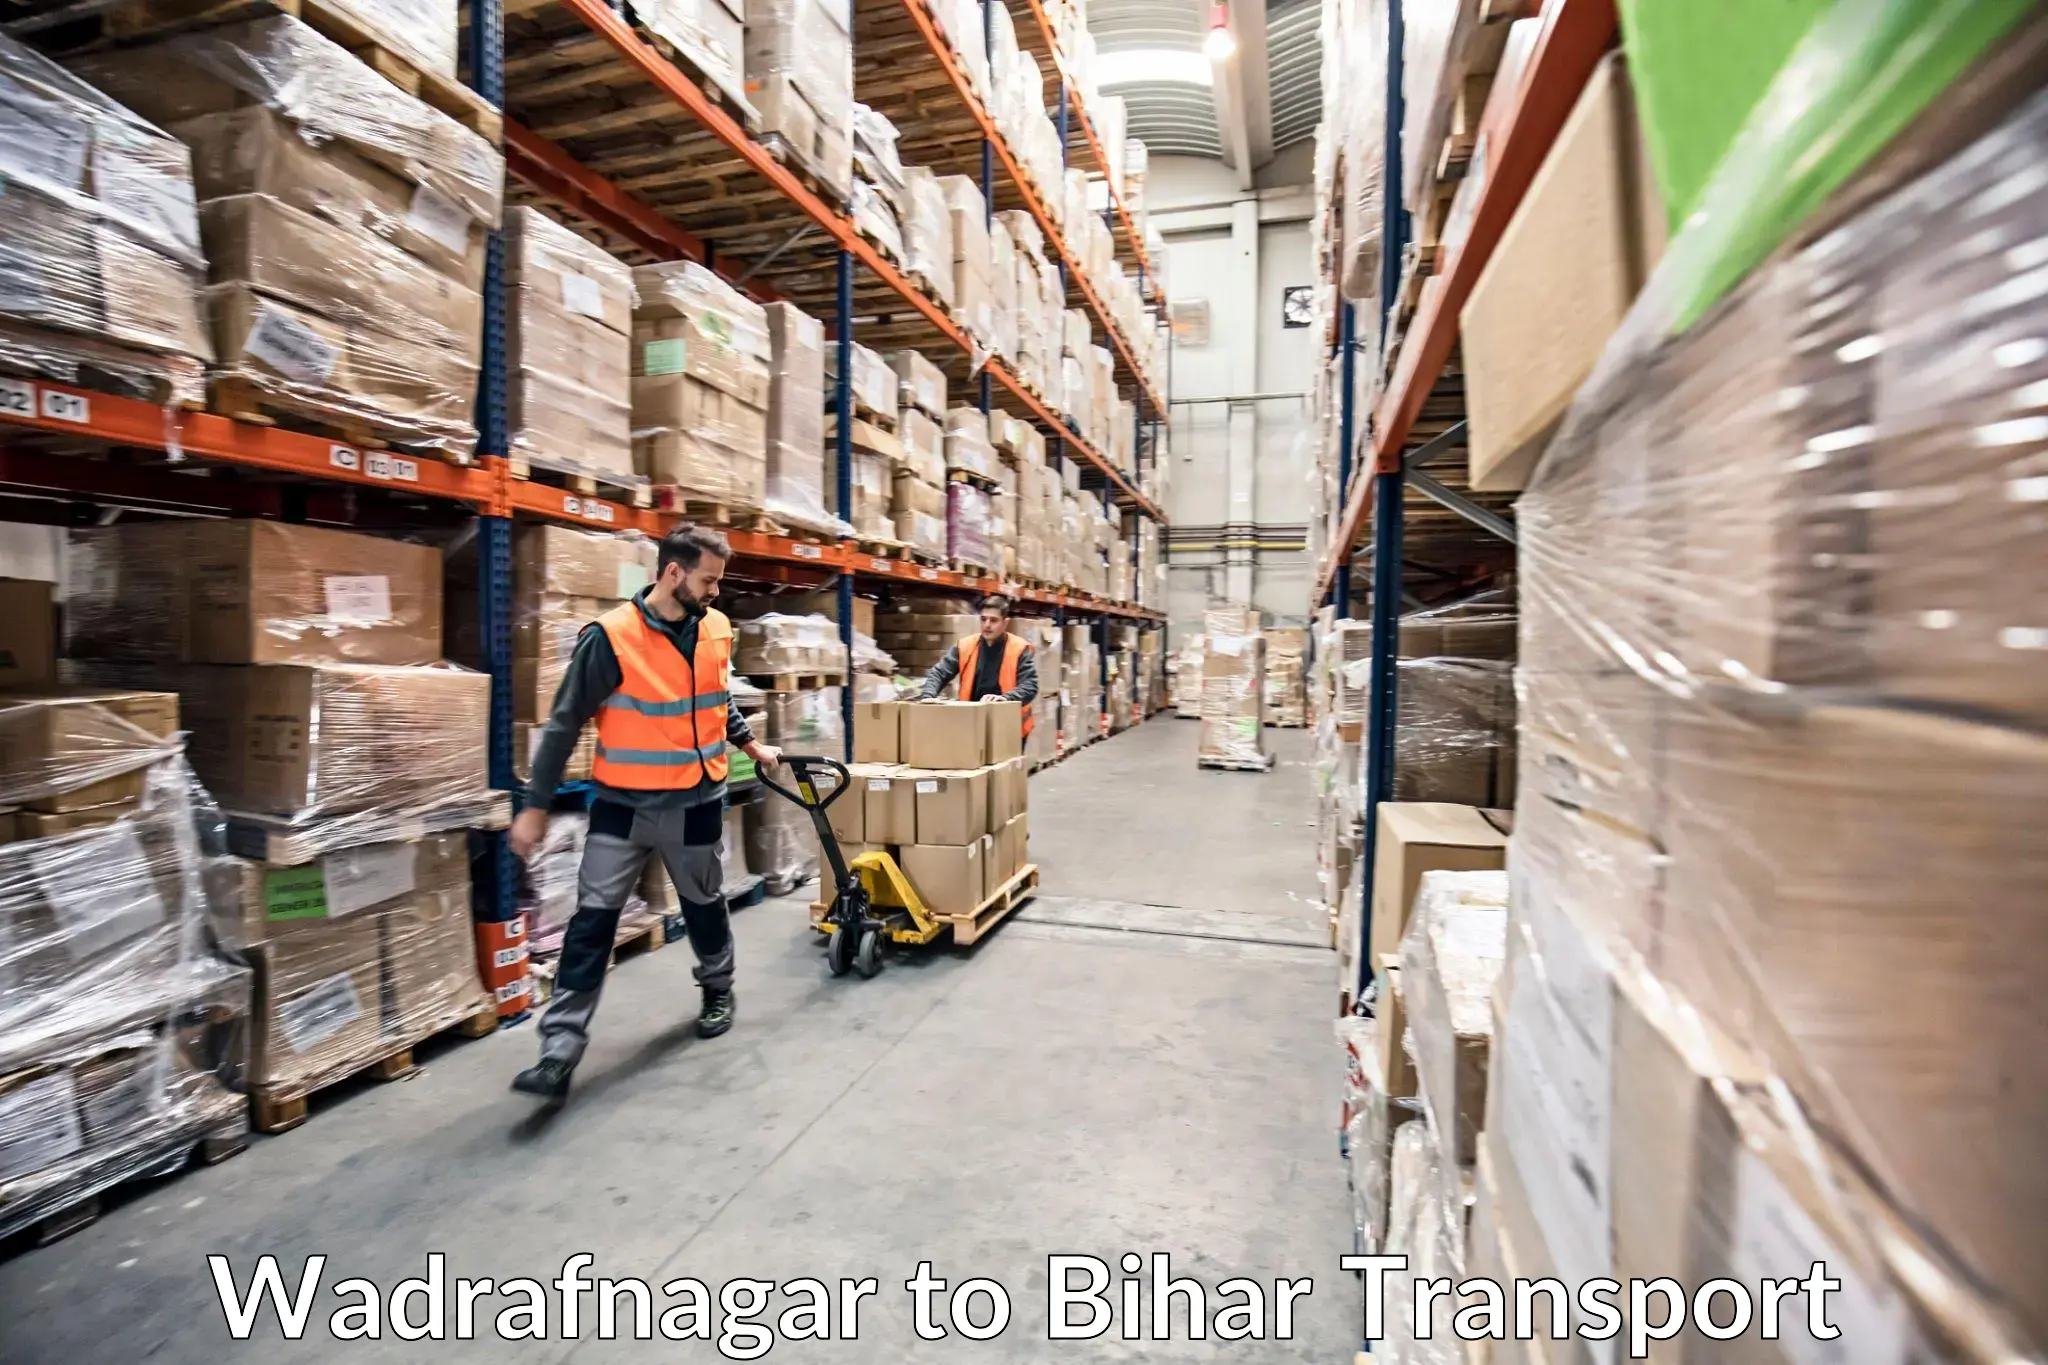 Goods delivery service Wadrafnagar to Biraul